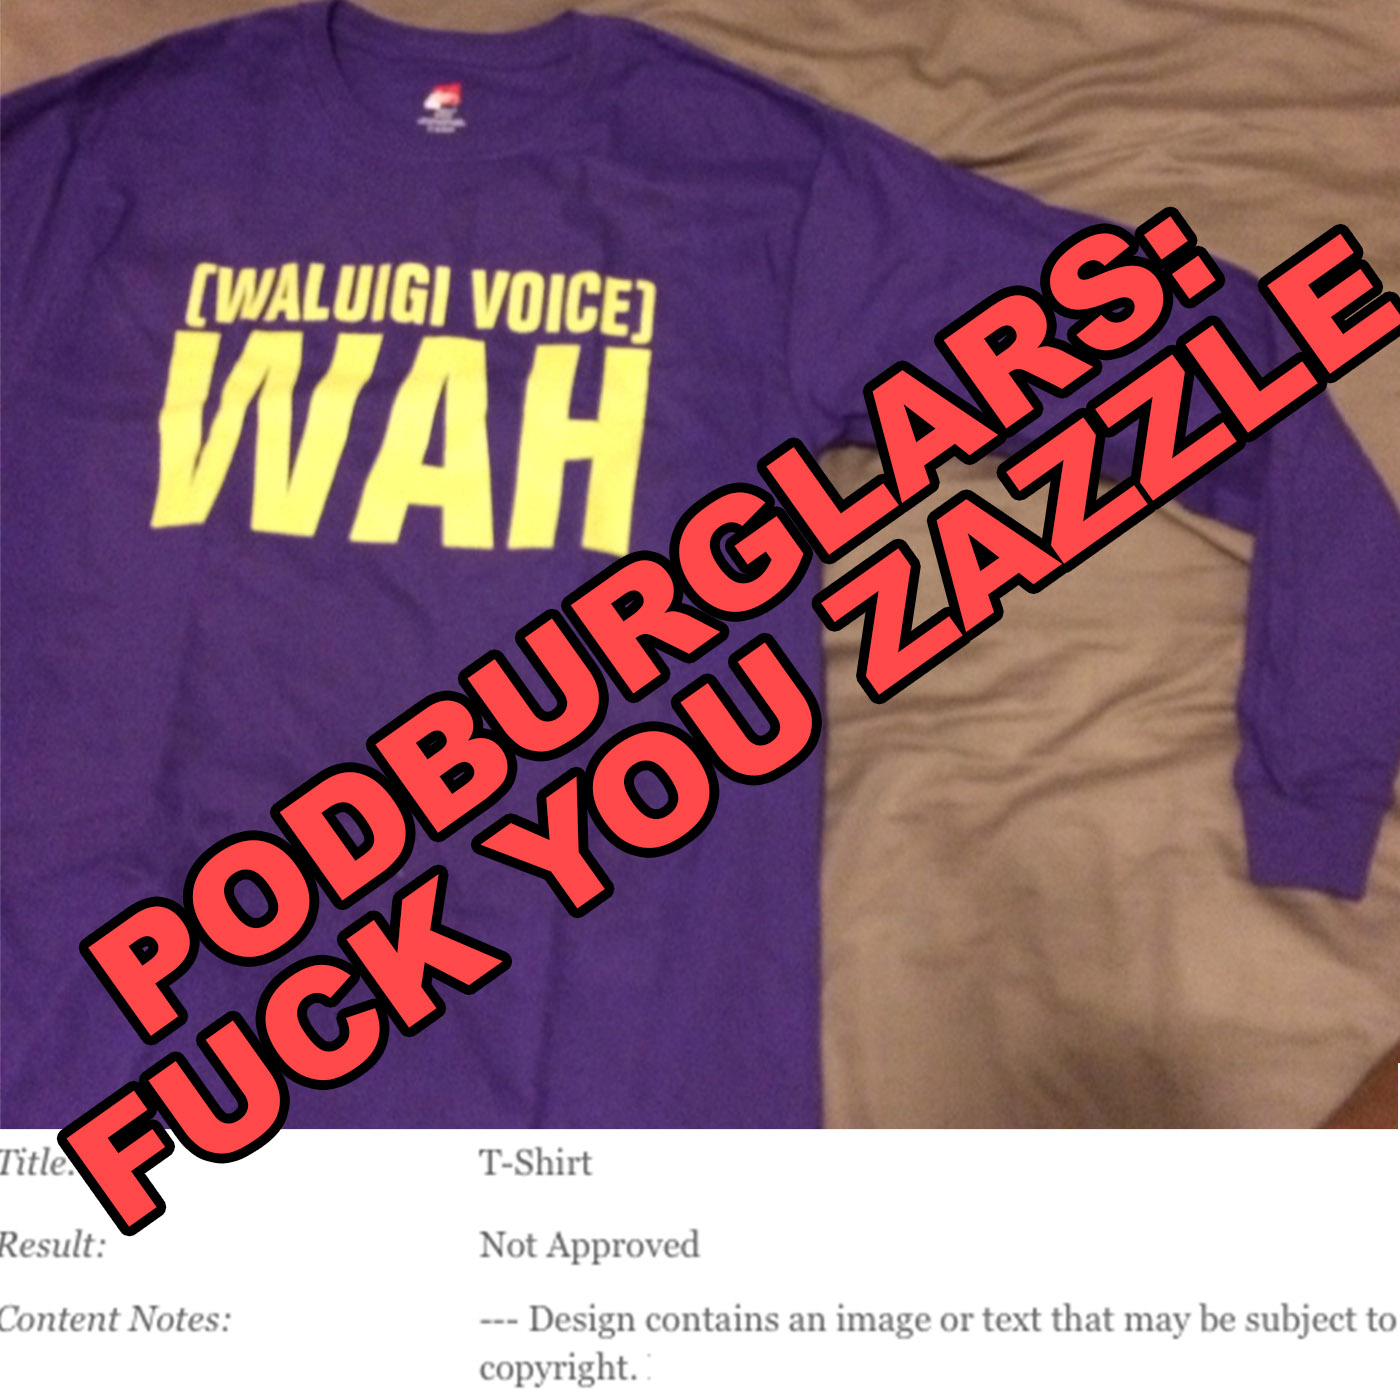 Podburglars: FUCK YOU ZAZZLE